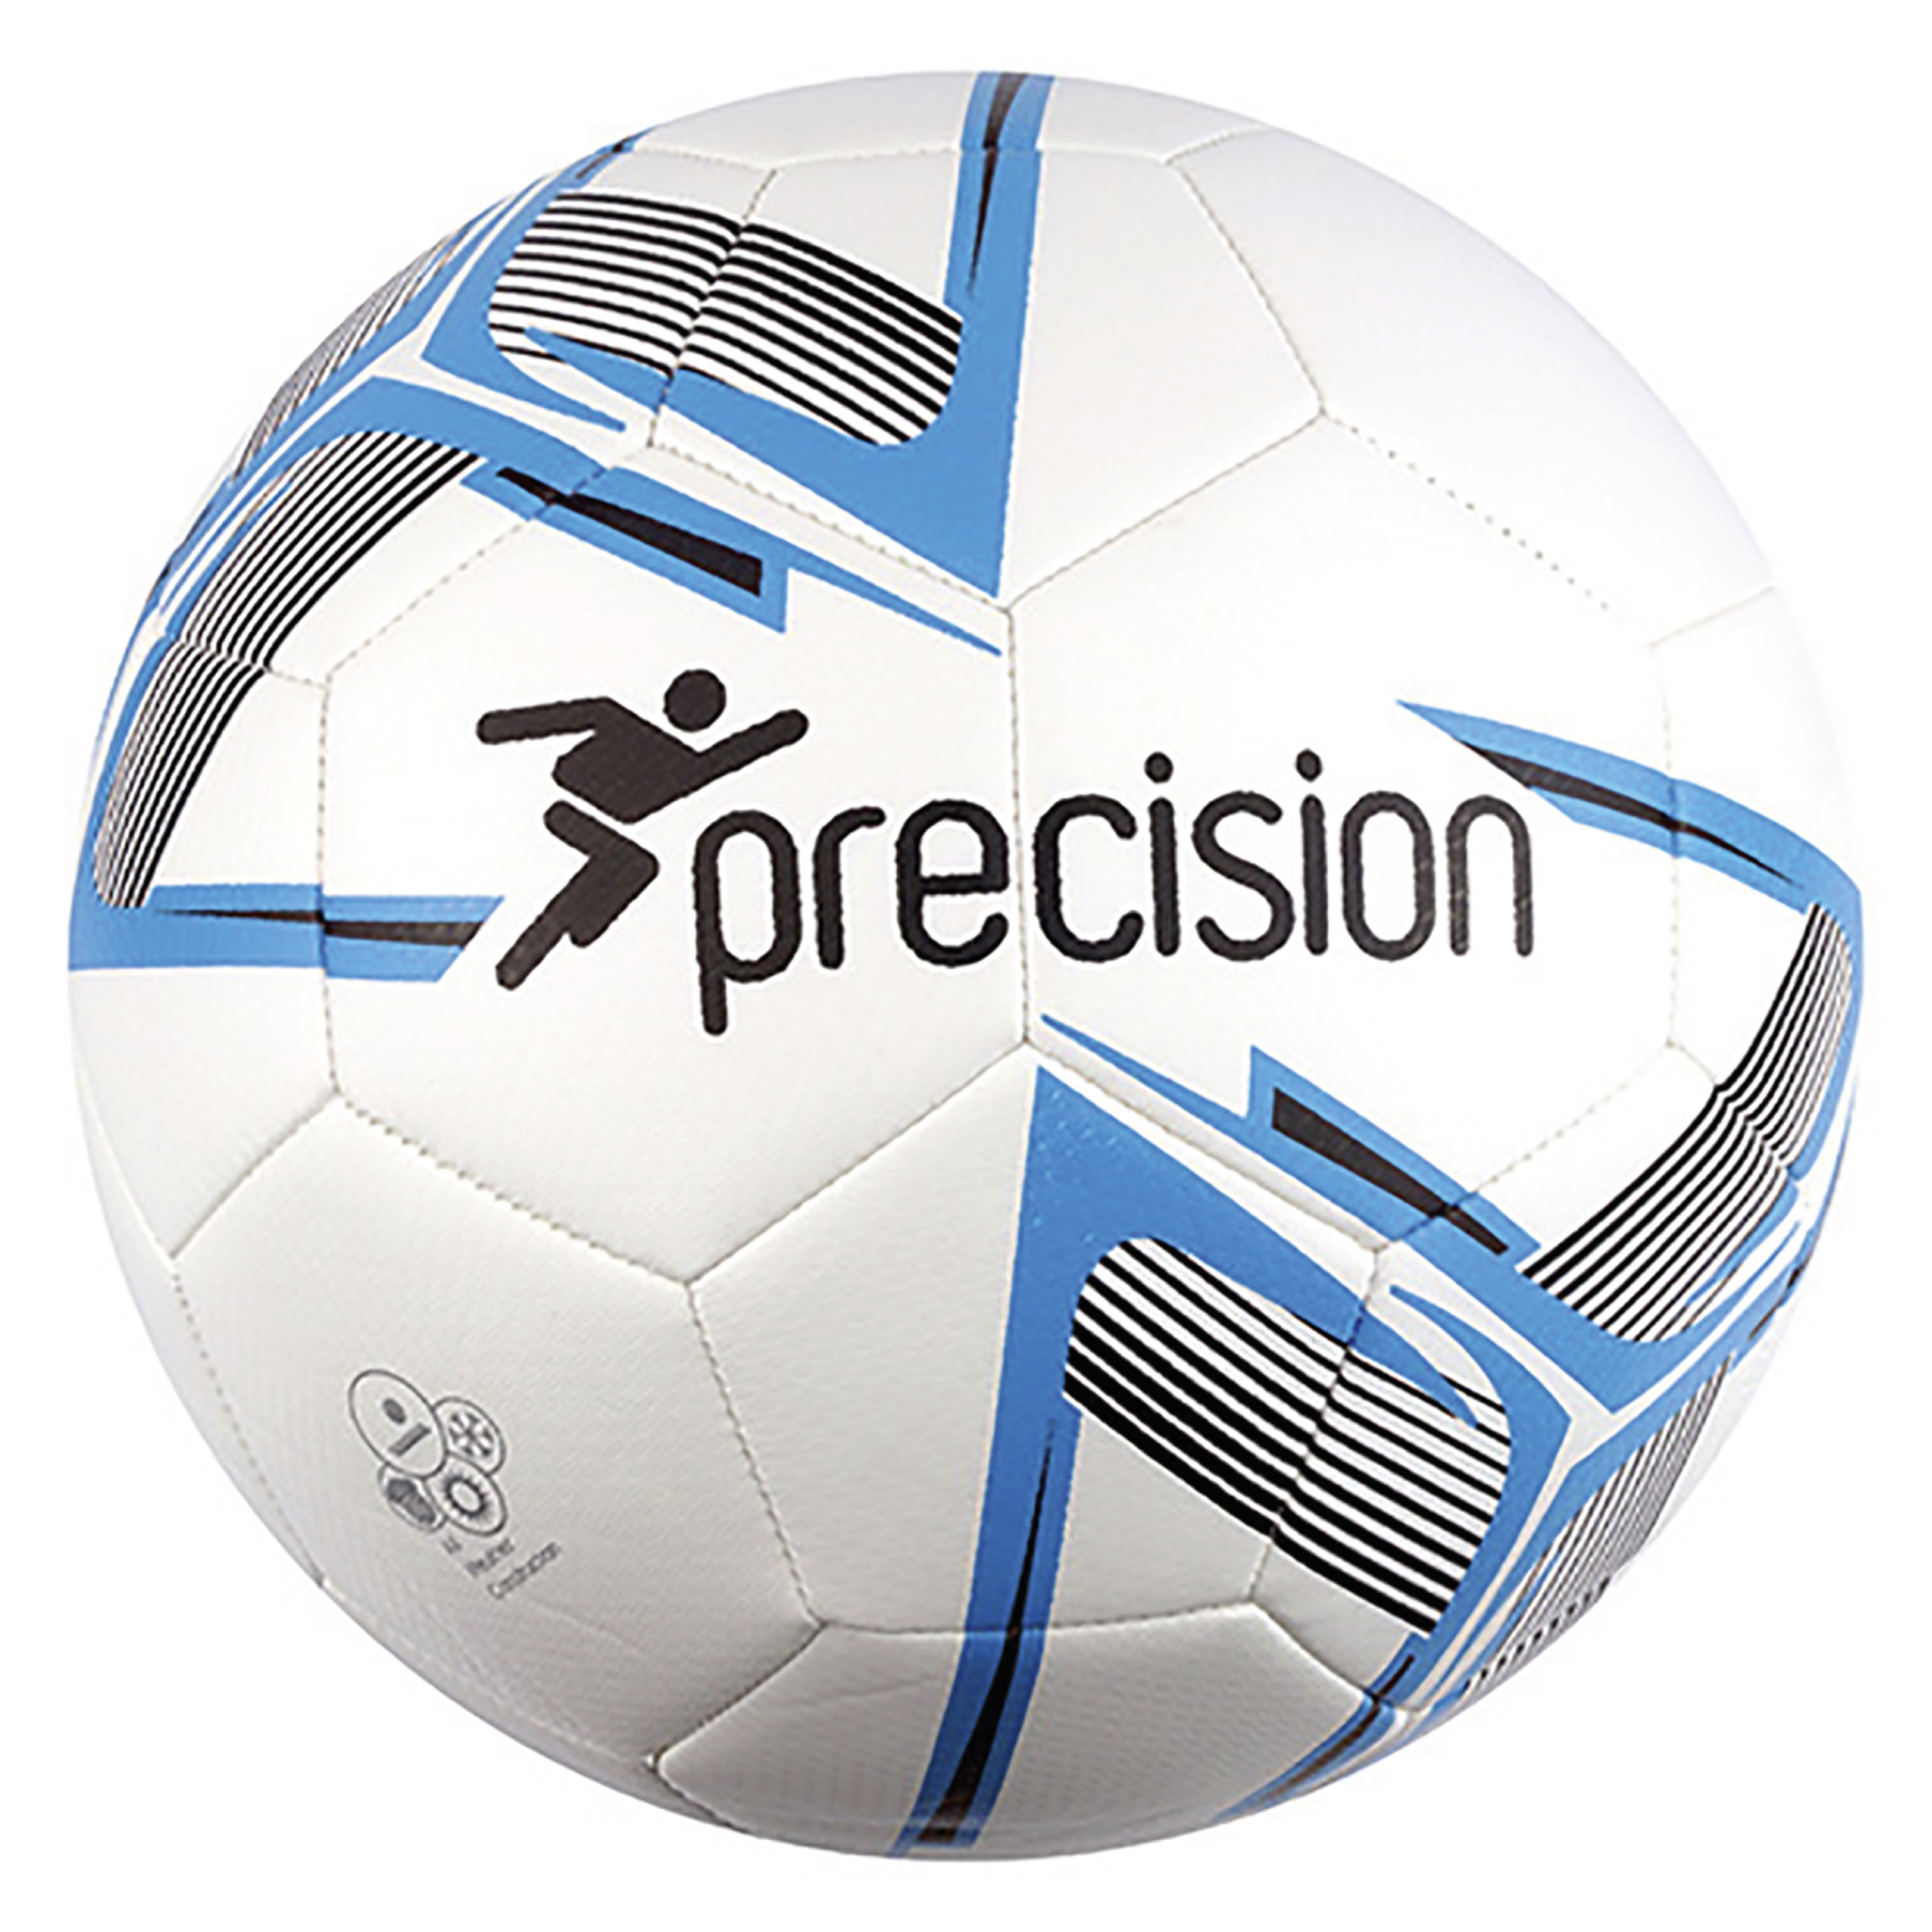 Precision Fusion Football - Size 3 - White/Blue/Black - IFBP09676 ...